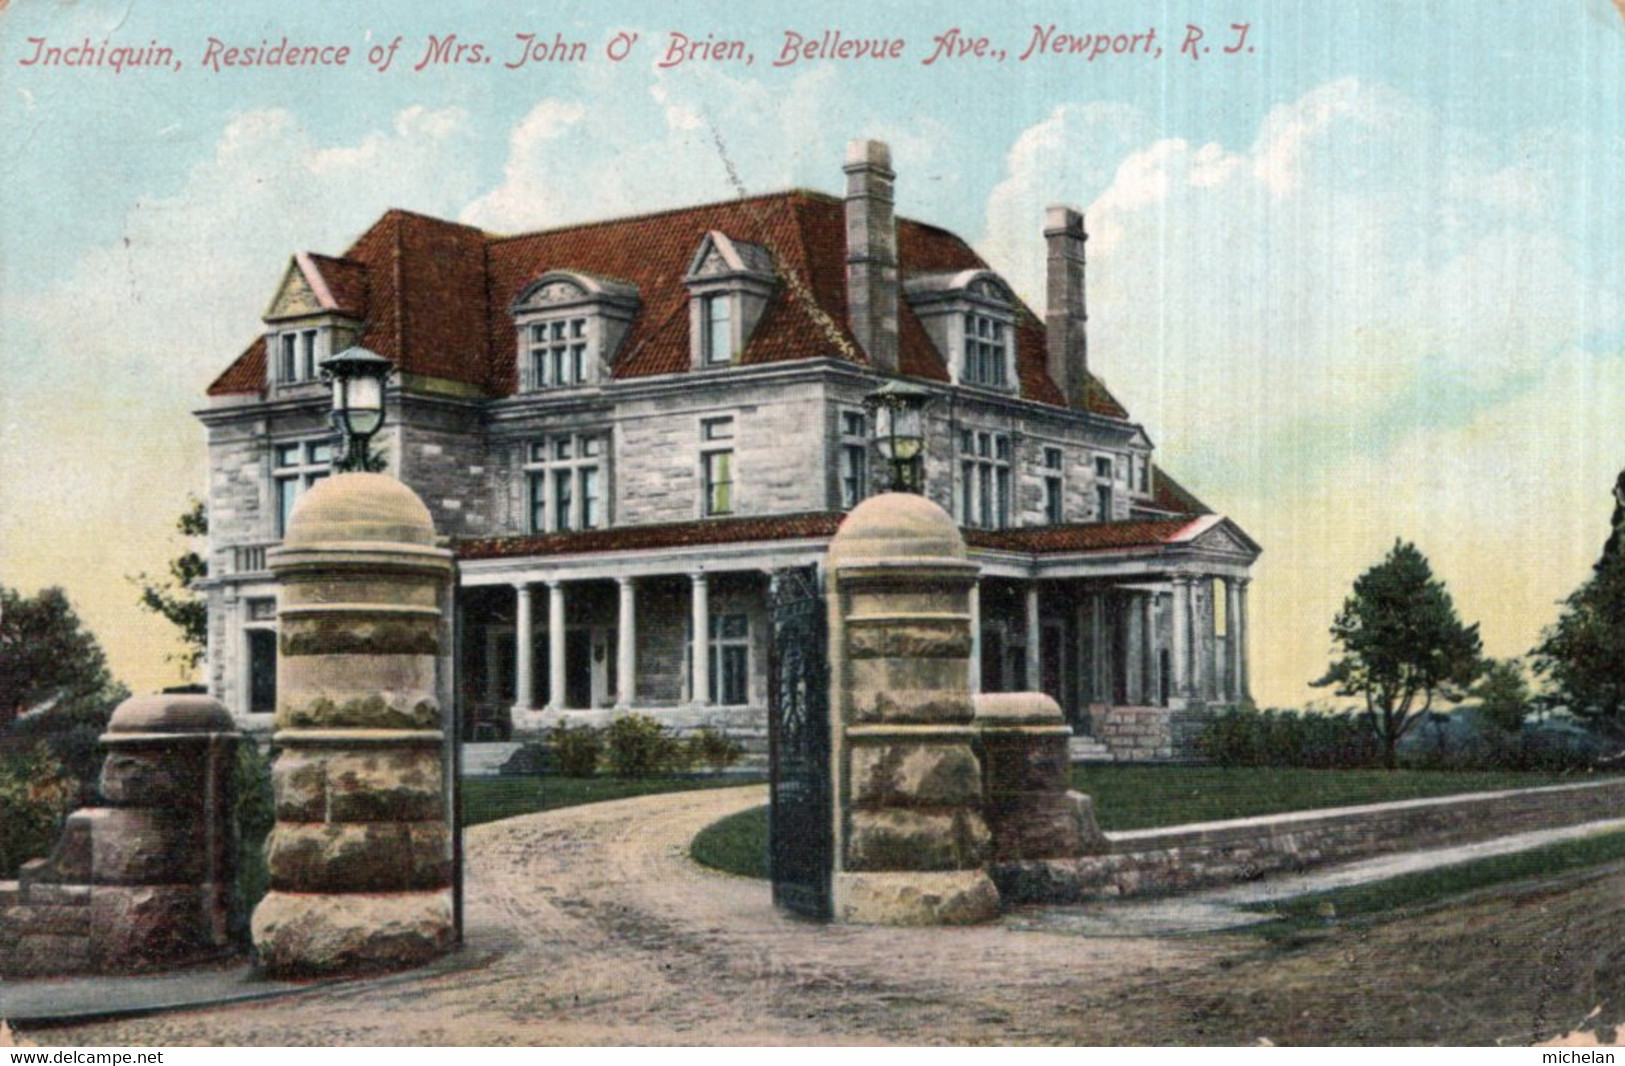 CPA   ETATS-UNIS--INDIQUIN, RESIDENCE OF MRS, JOHN O' BRIEN, BELLEVUE AVE. NEWPORT--1908 - Newport